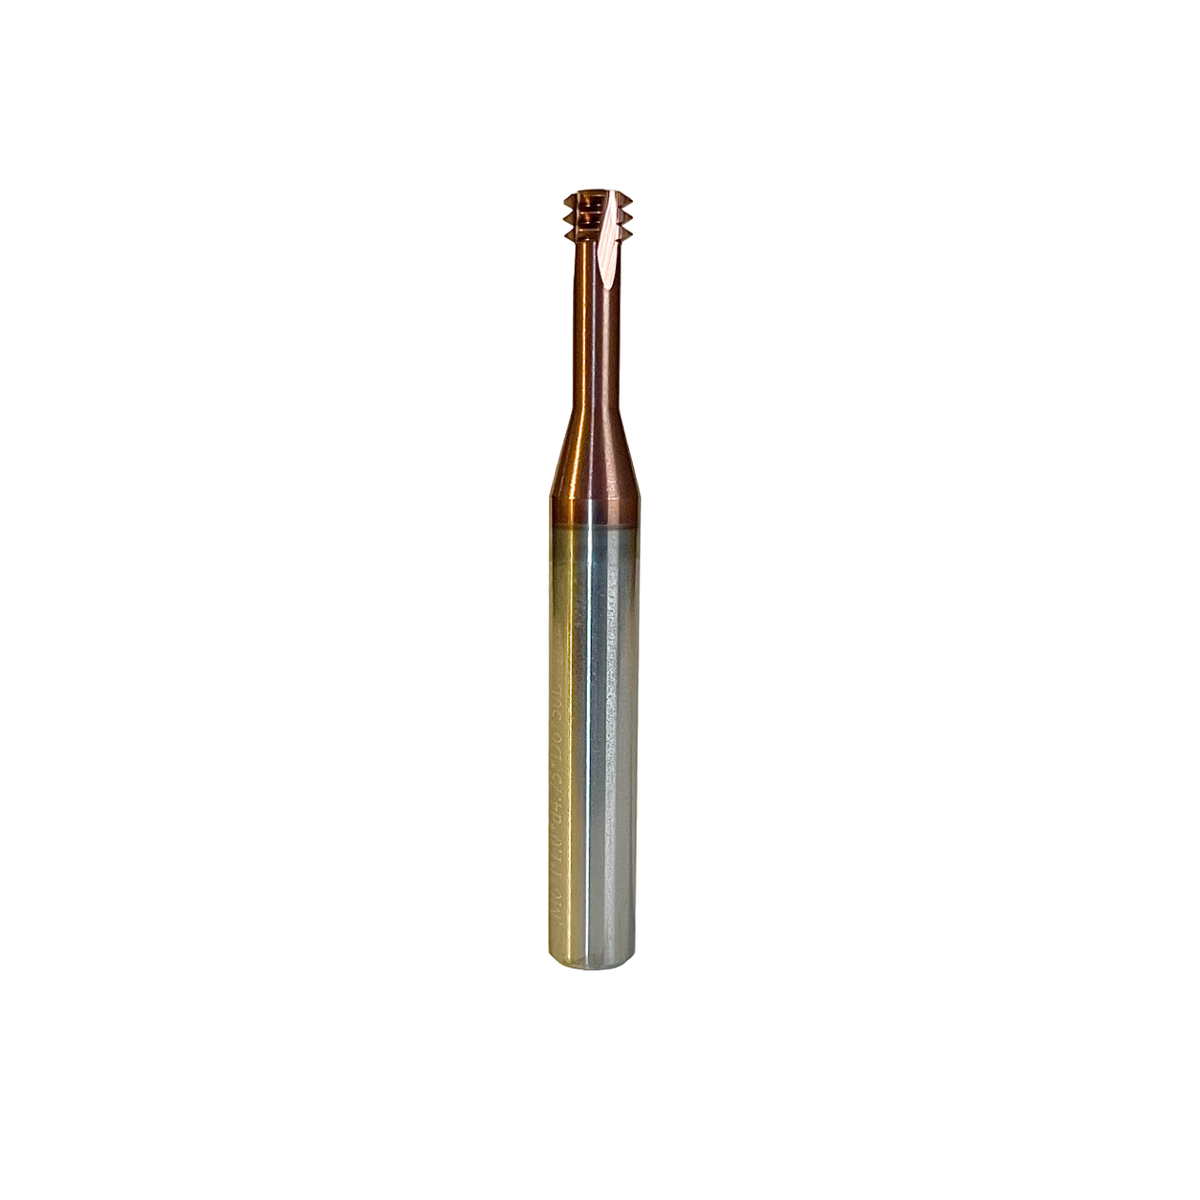 Tungsten Carbide - 3 Tooth Thread End Mill Cutter - 3 Flutes - M6 x 1.0